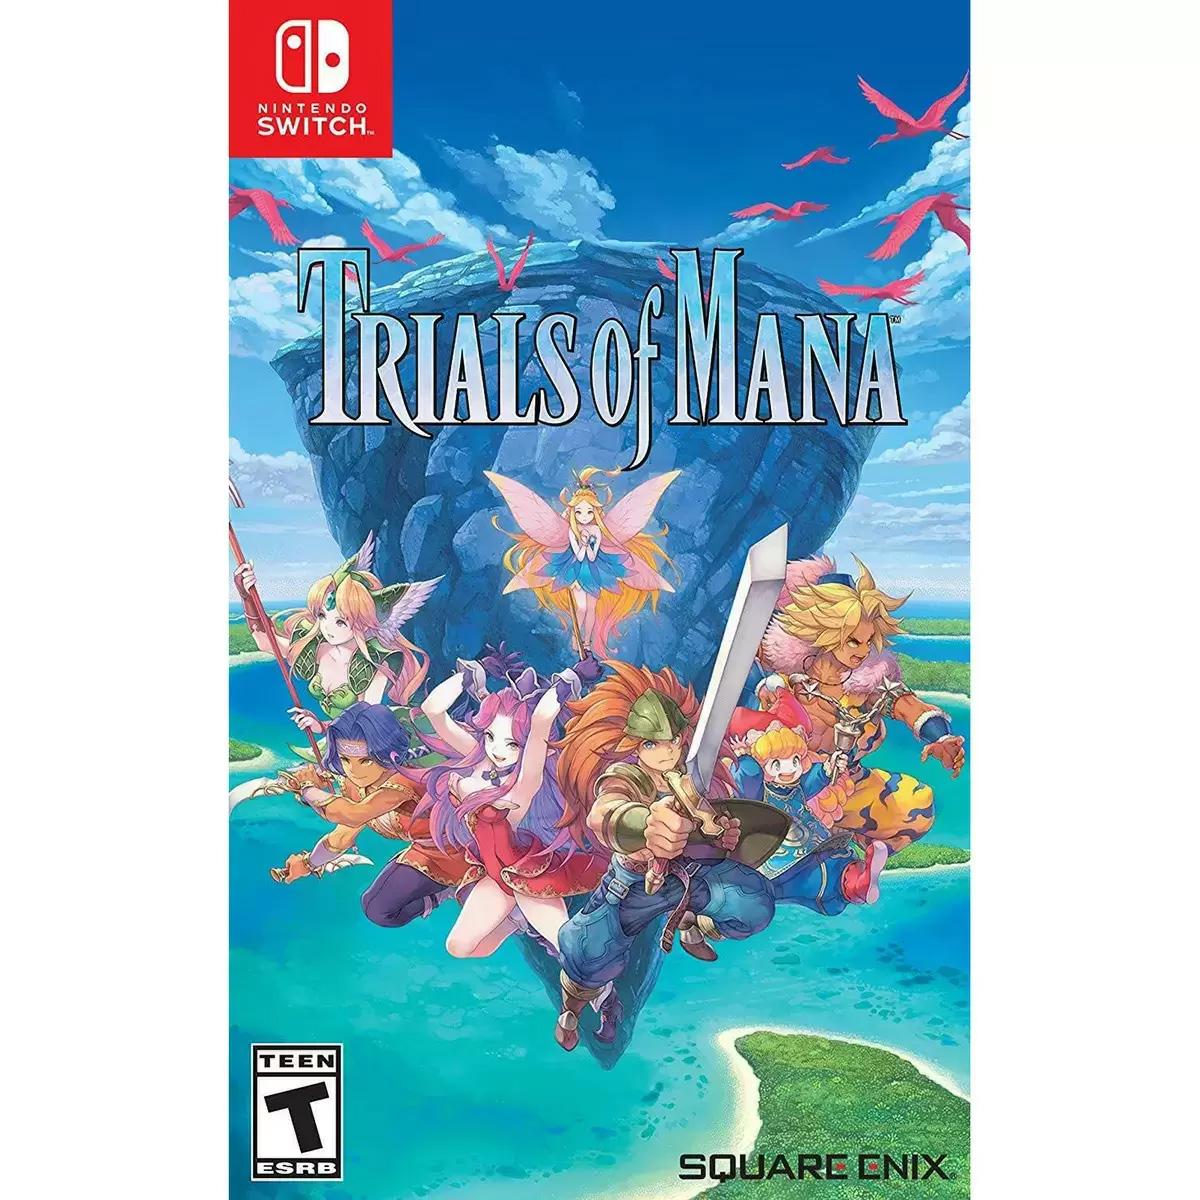 Trials of Mana Nintendo Switch for $19.99